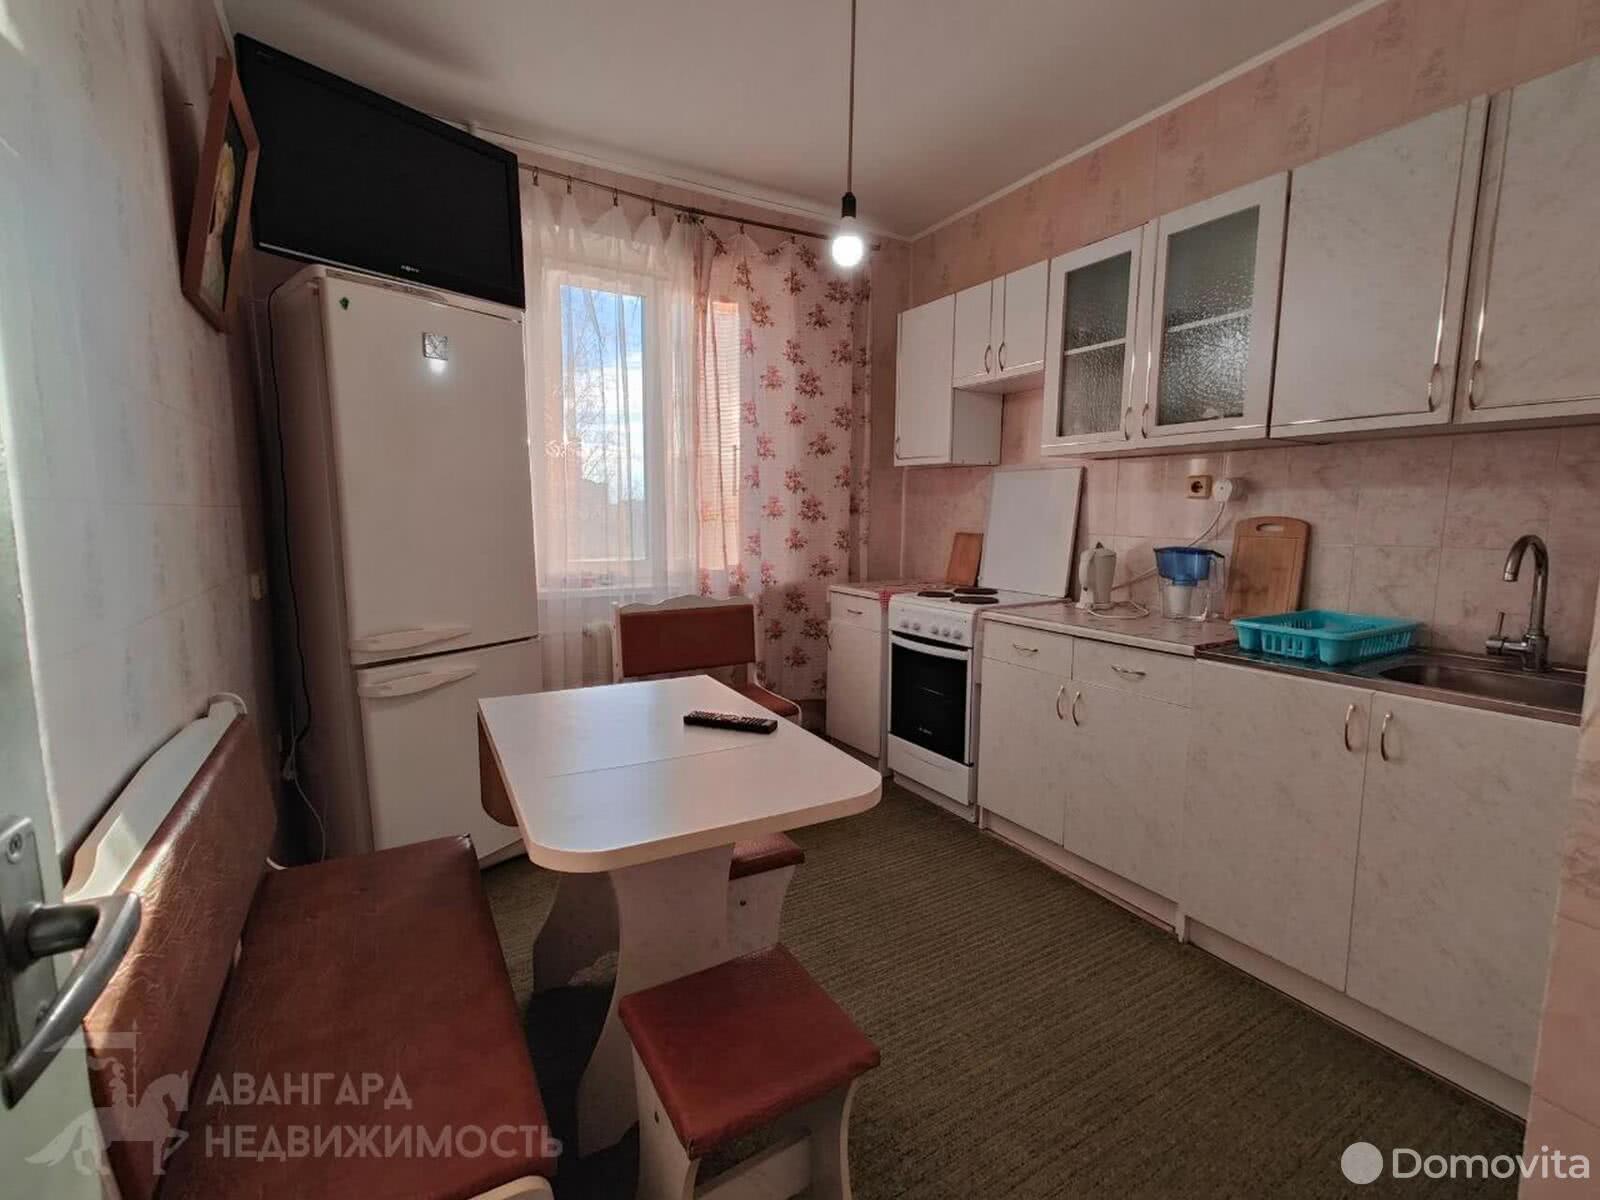 квартира, Минск, ул. Лобанка, д. 71, стоимость аренды 984 р./мес.